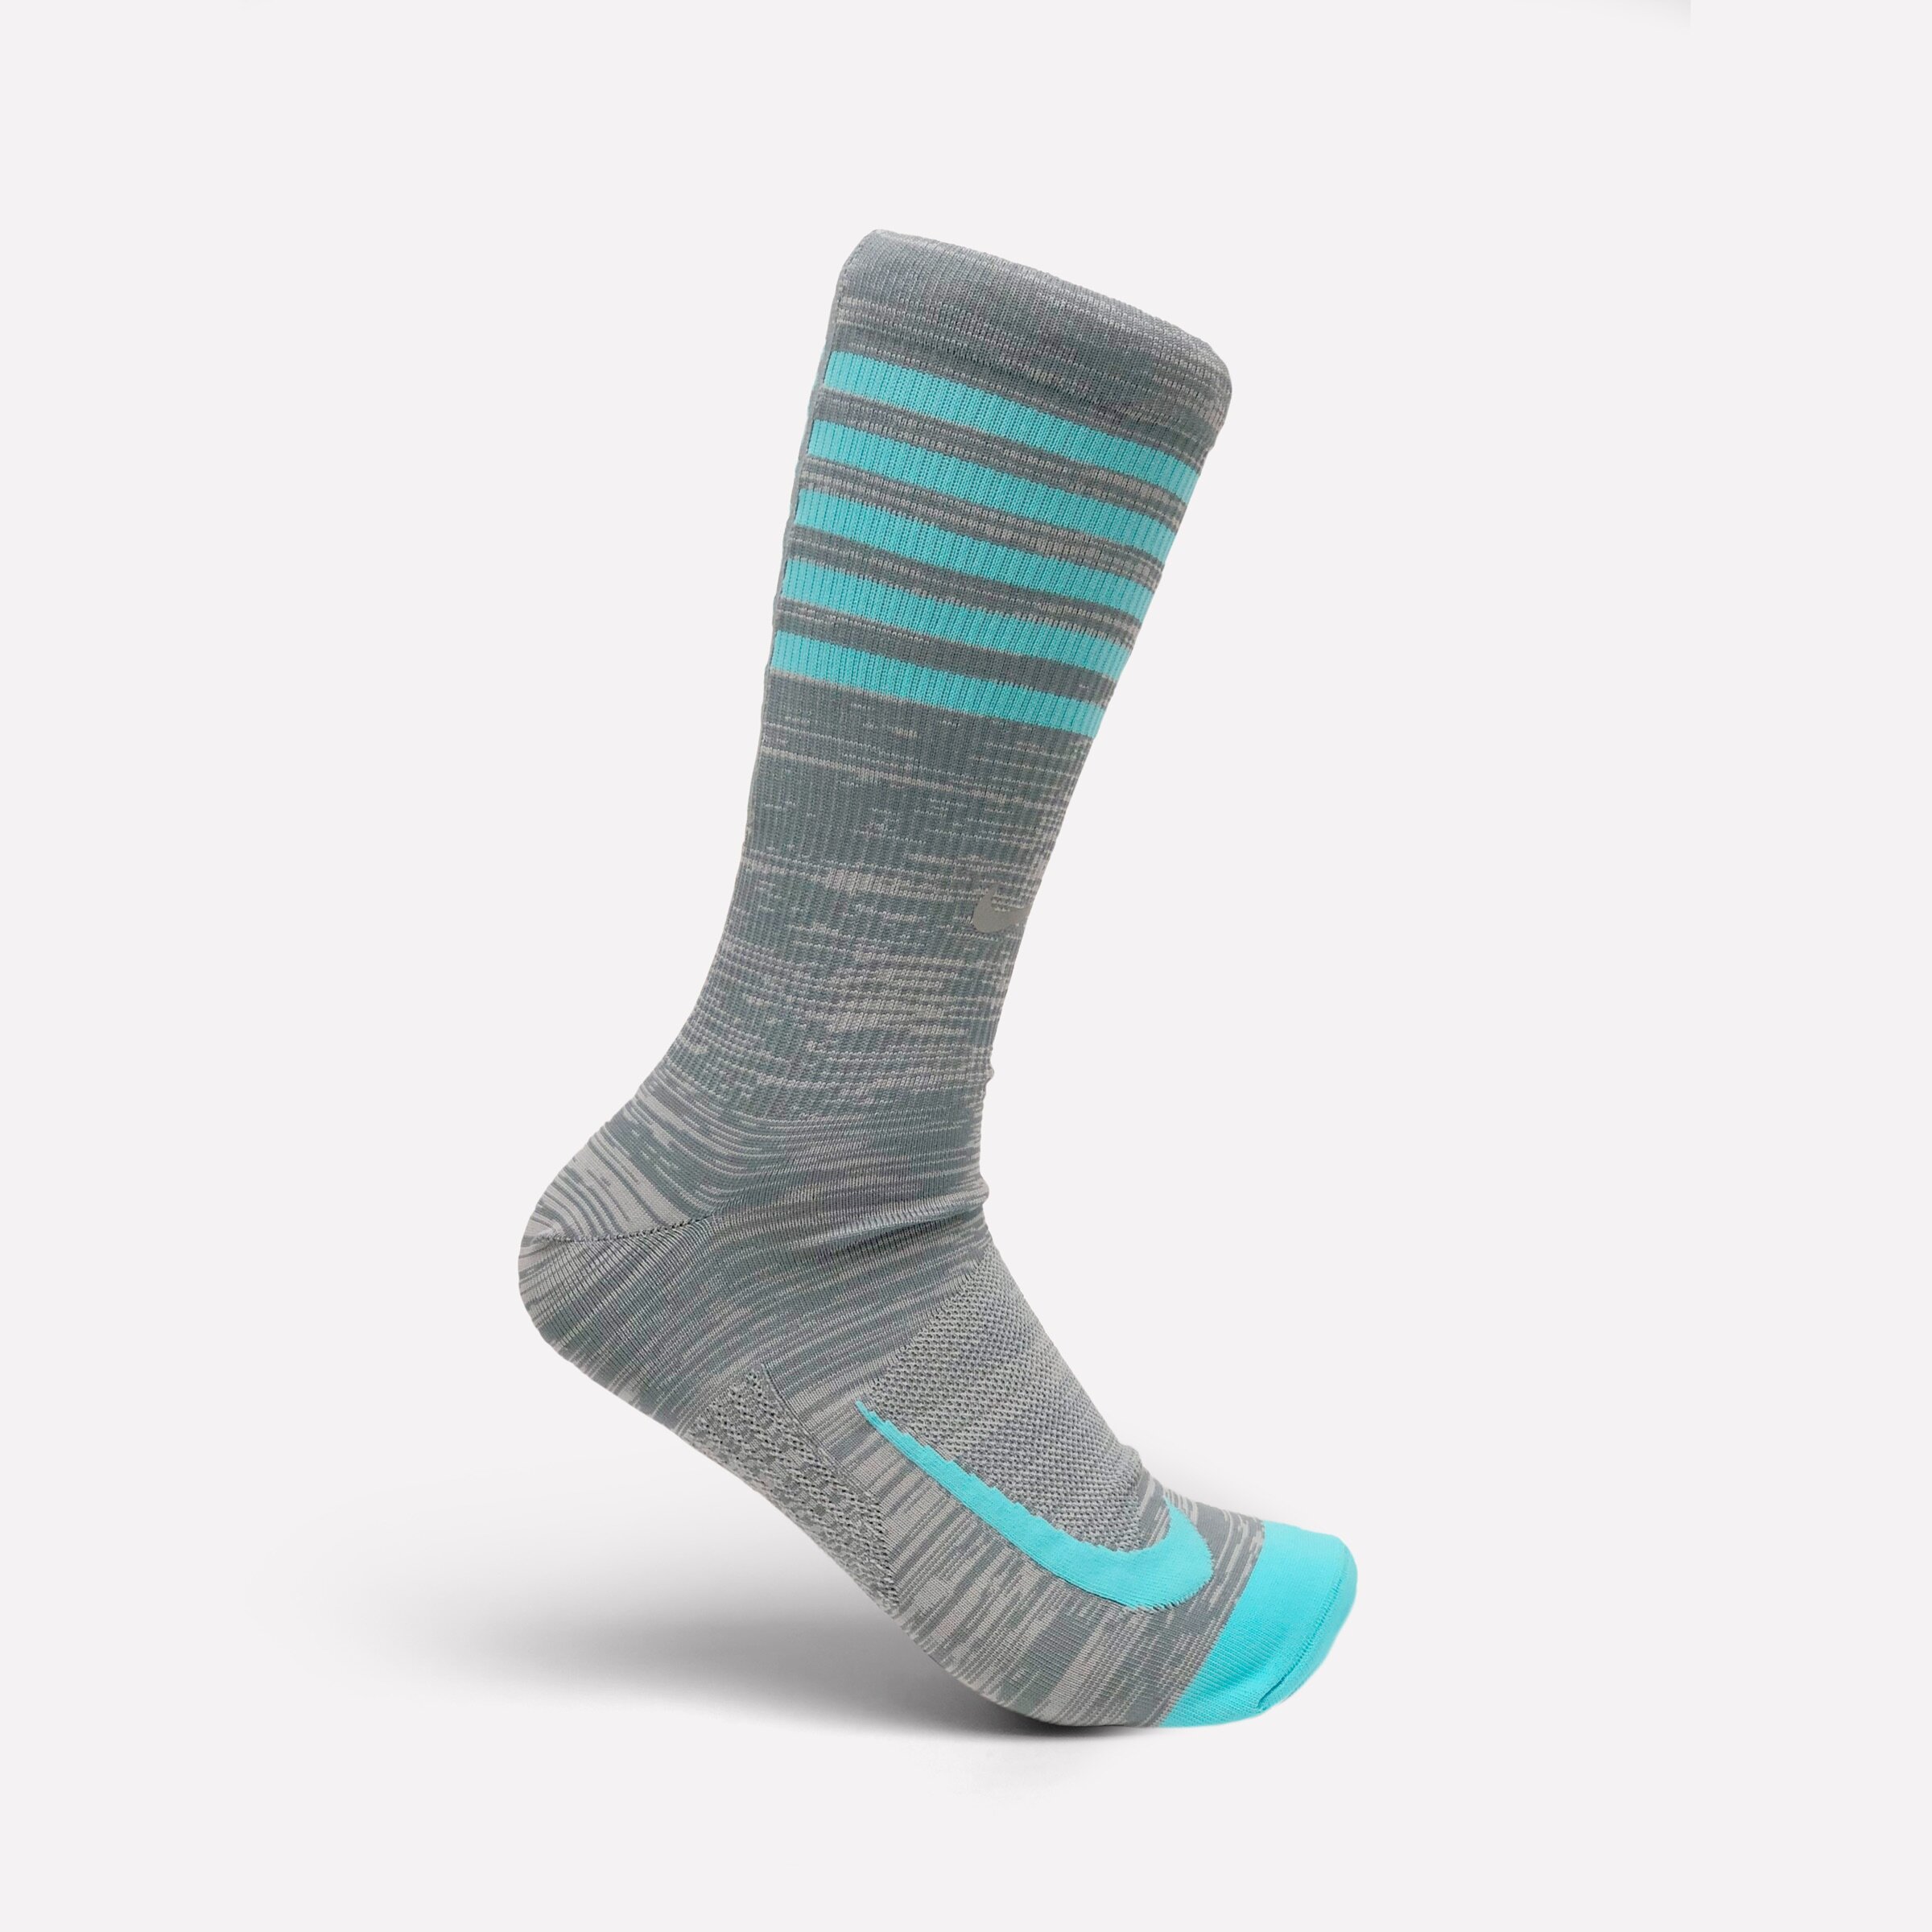 OYF - Nike sock 1 copy.jpg